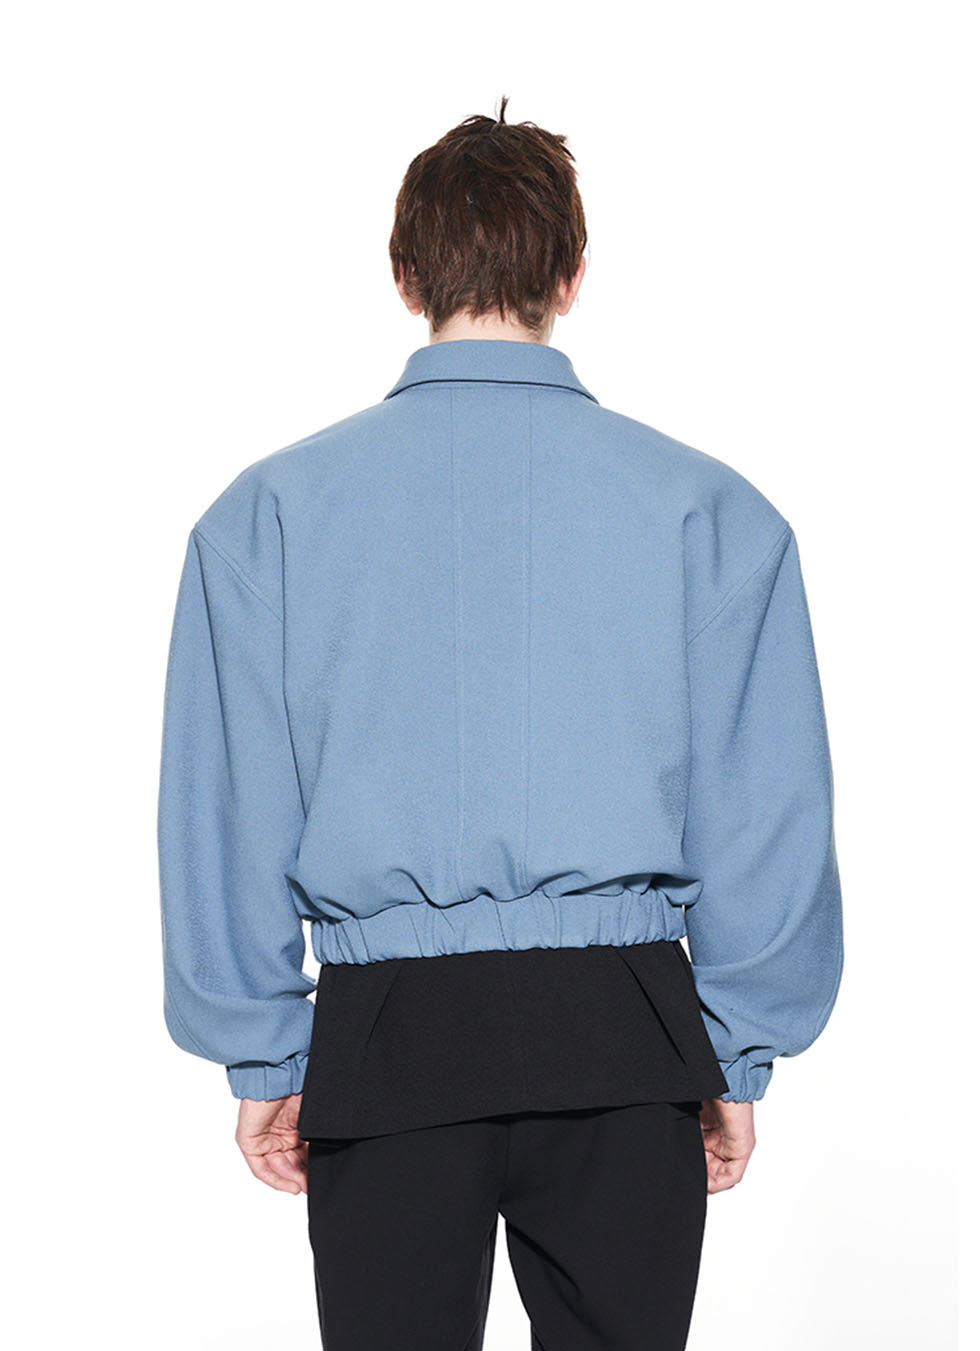 Lapel textured geometric design short jacket 